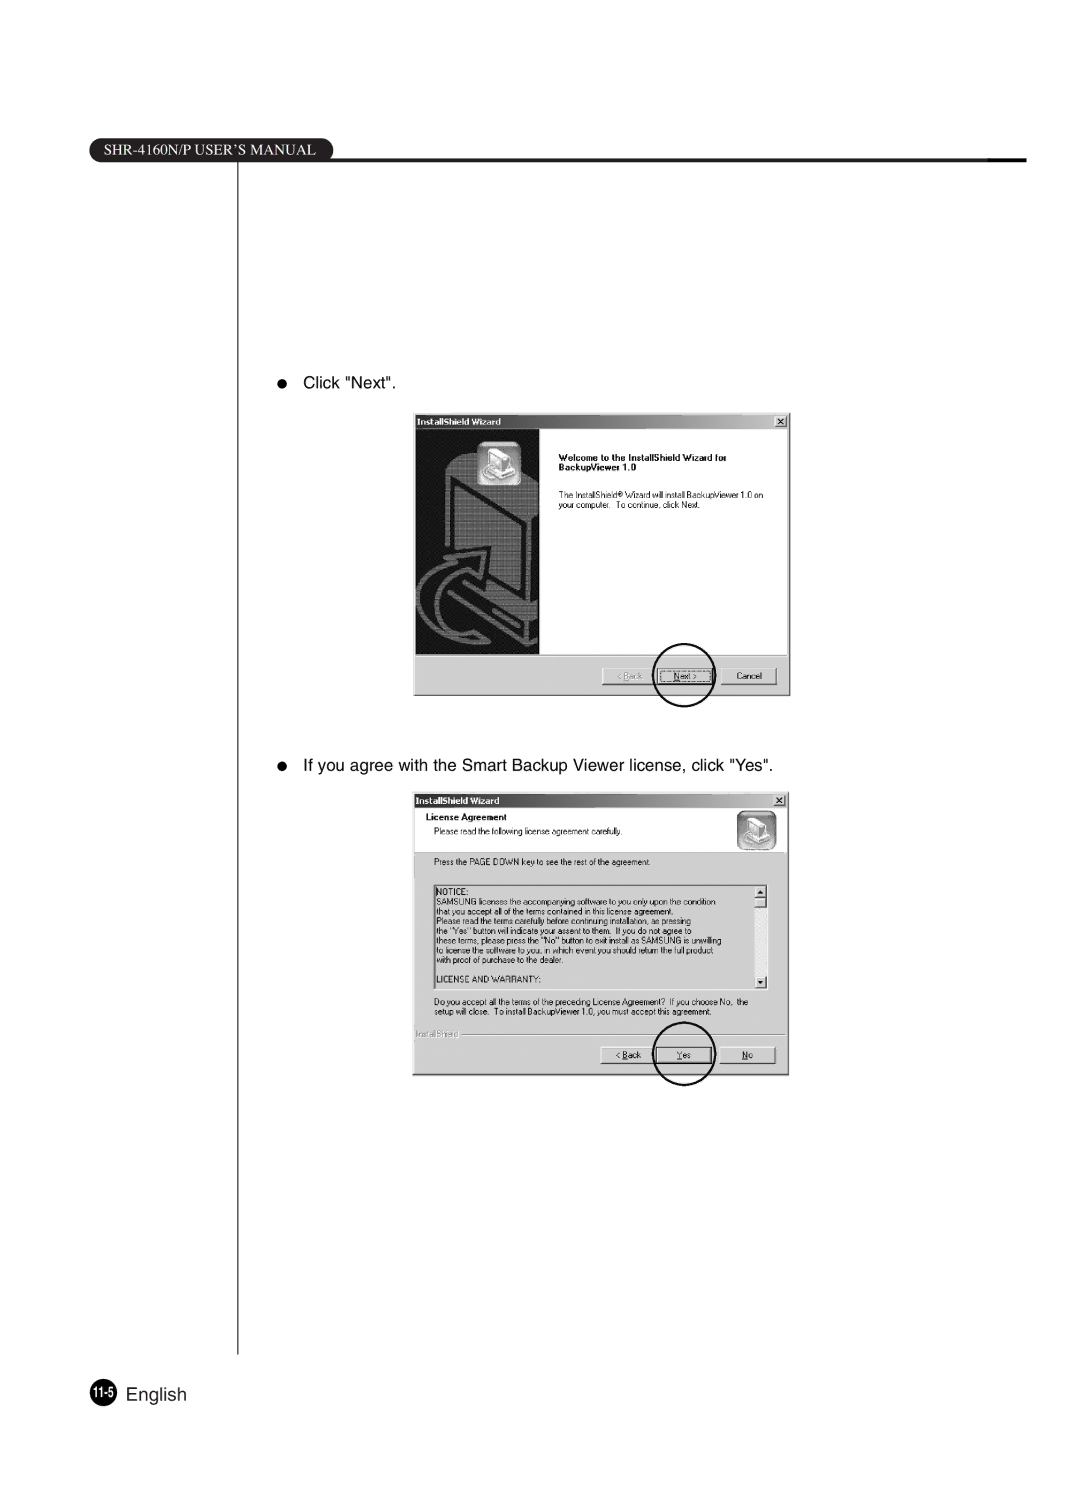 Samsung SHR-4160P manual 11-5English 